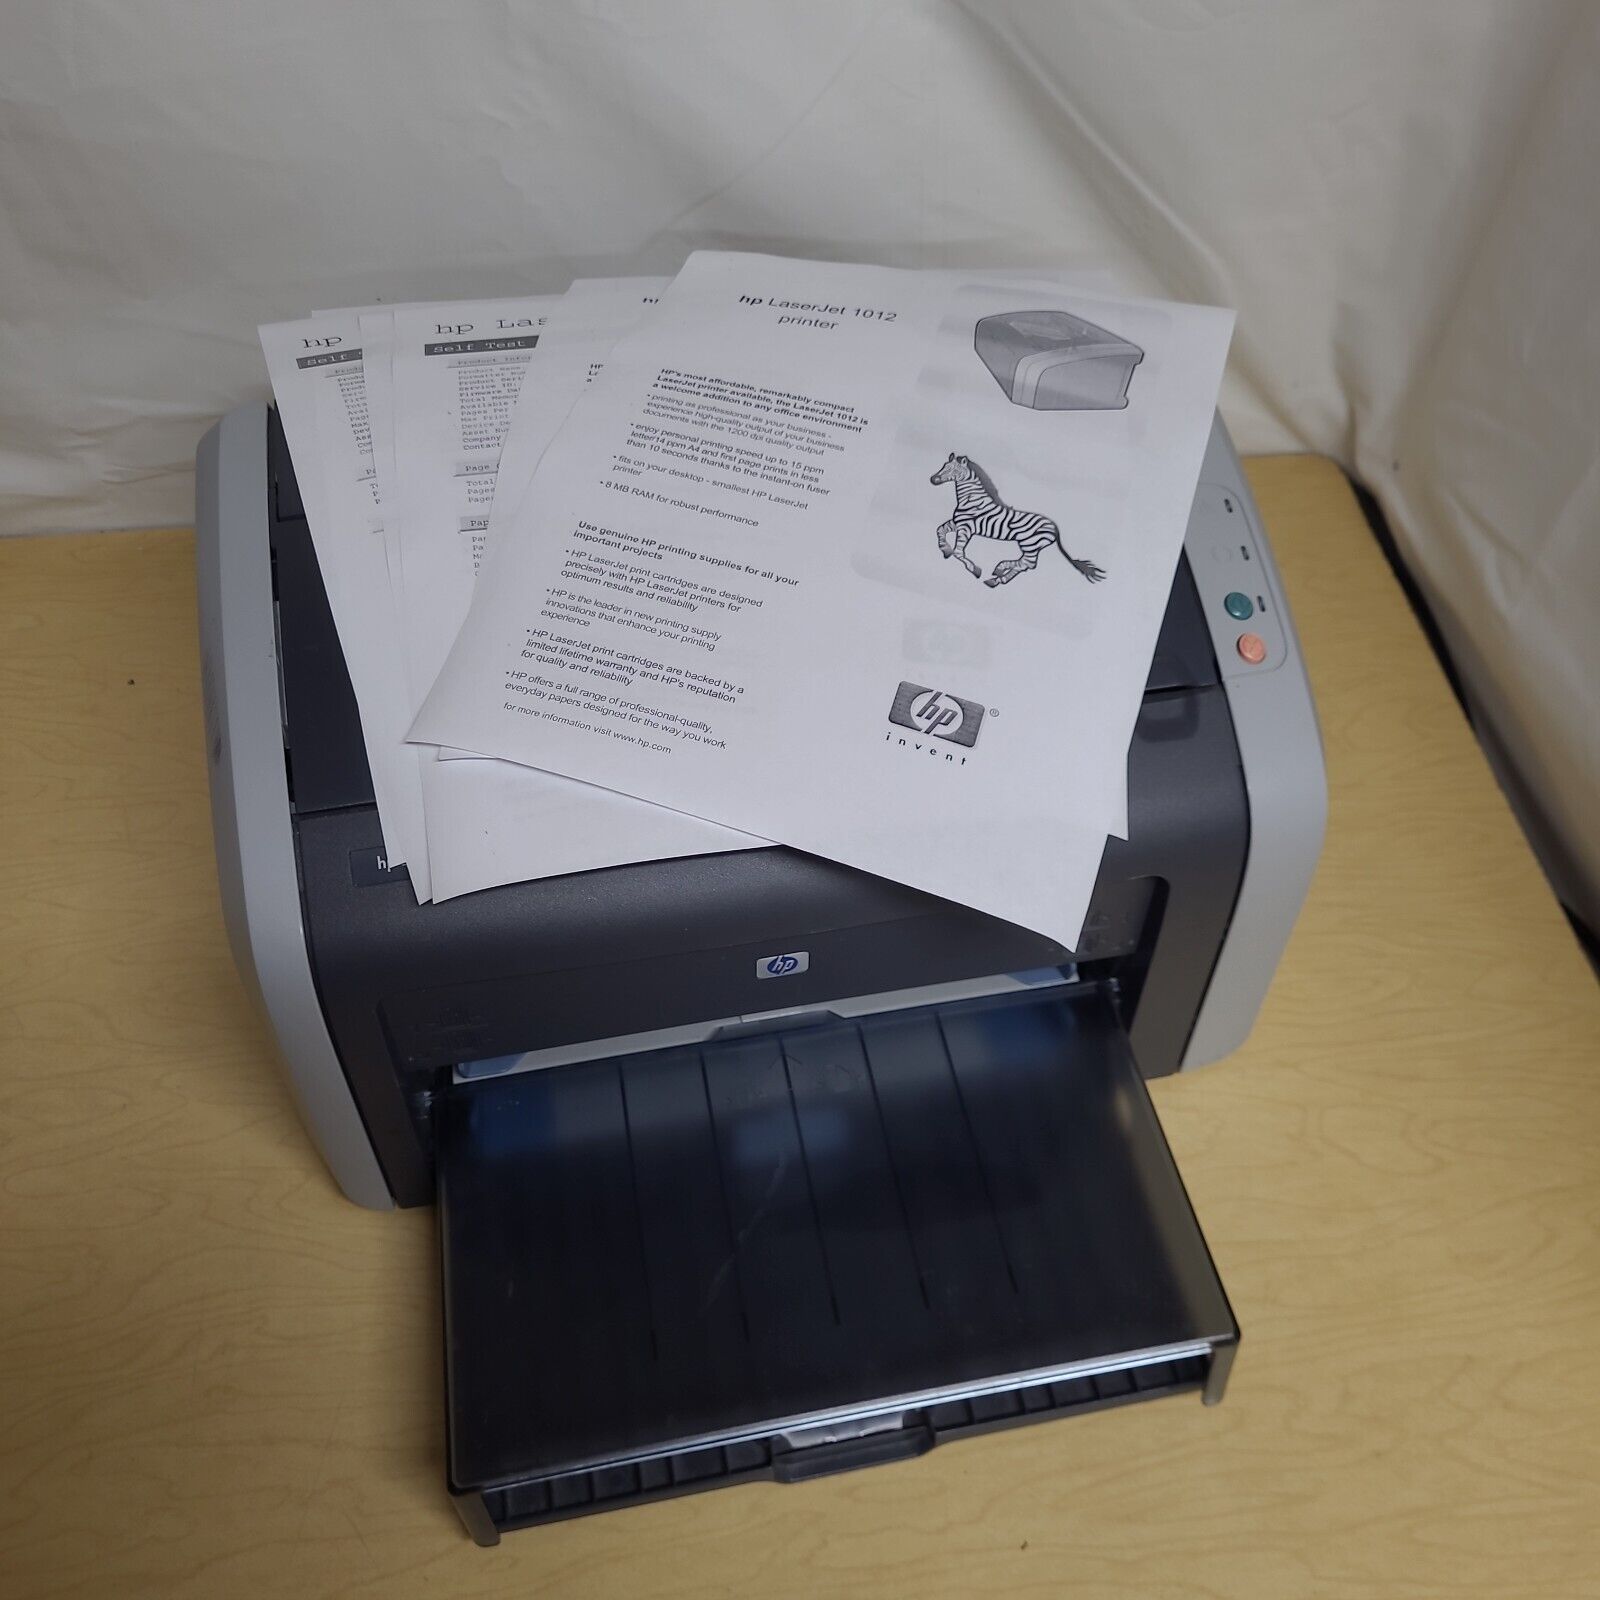 HP LaserJet 1012 Printer Monochrome Black White No Toner